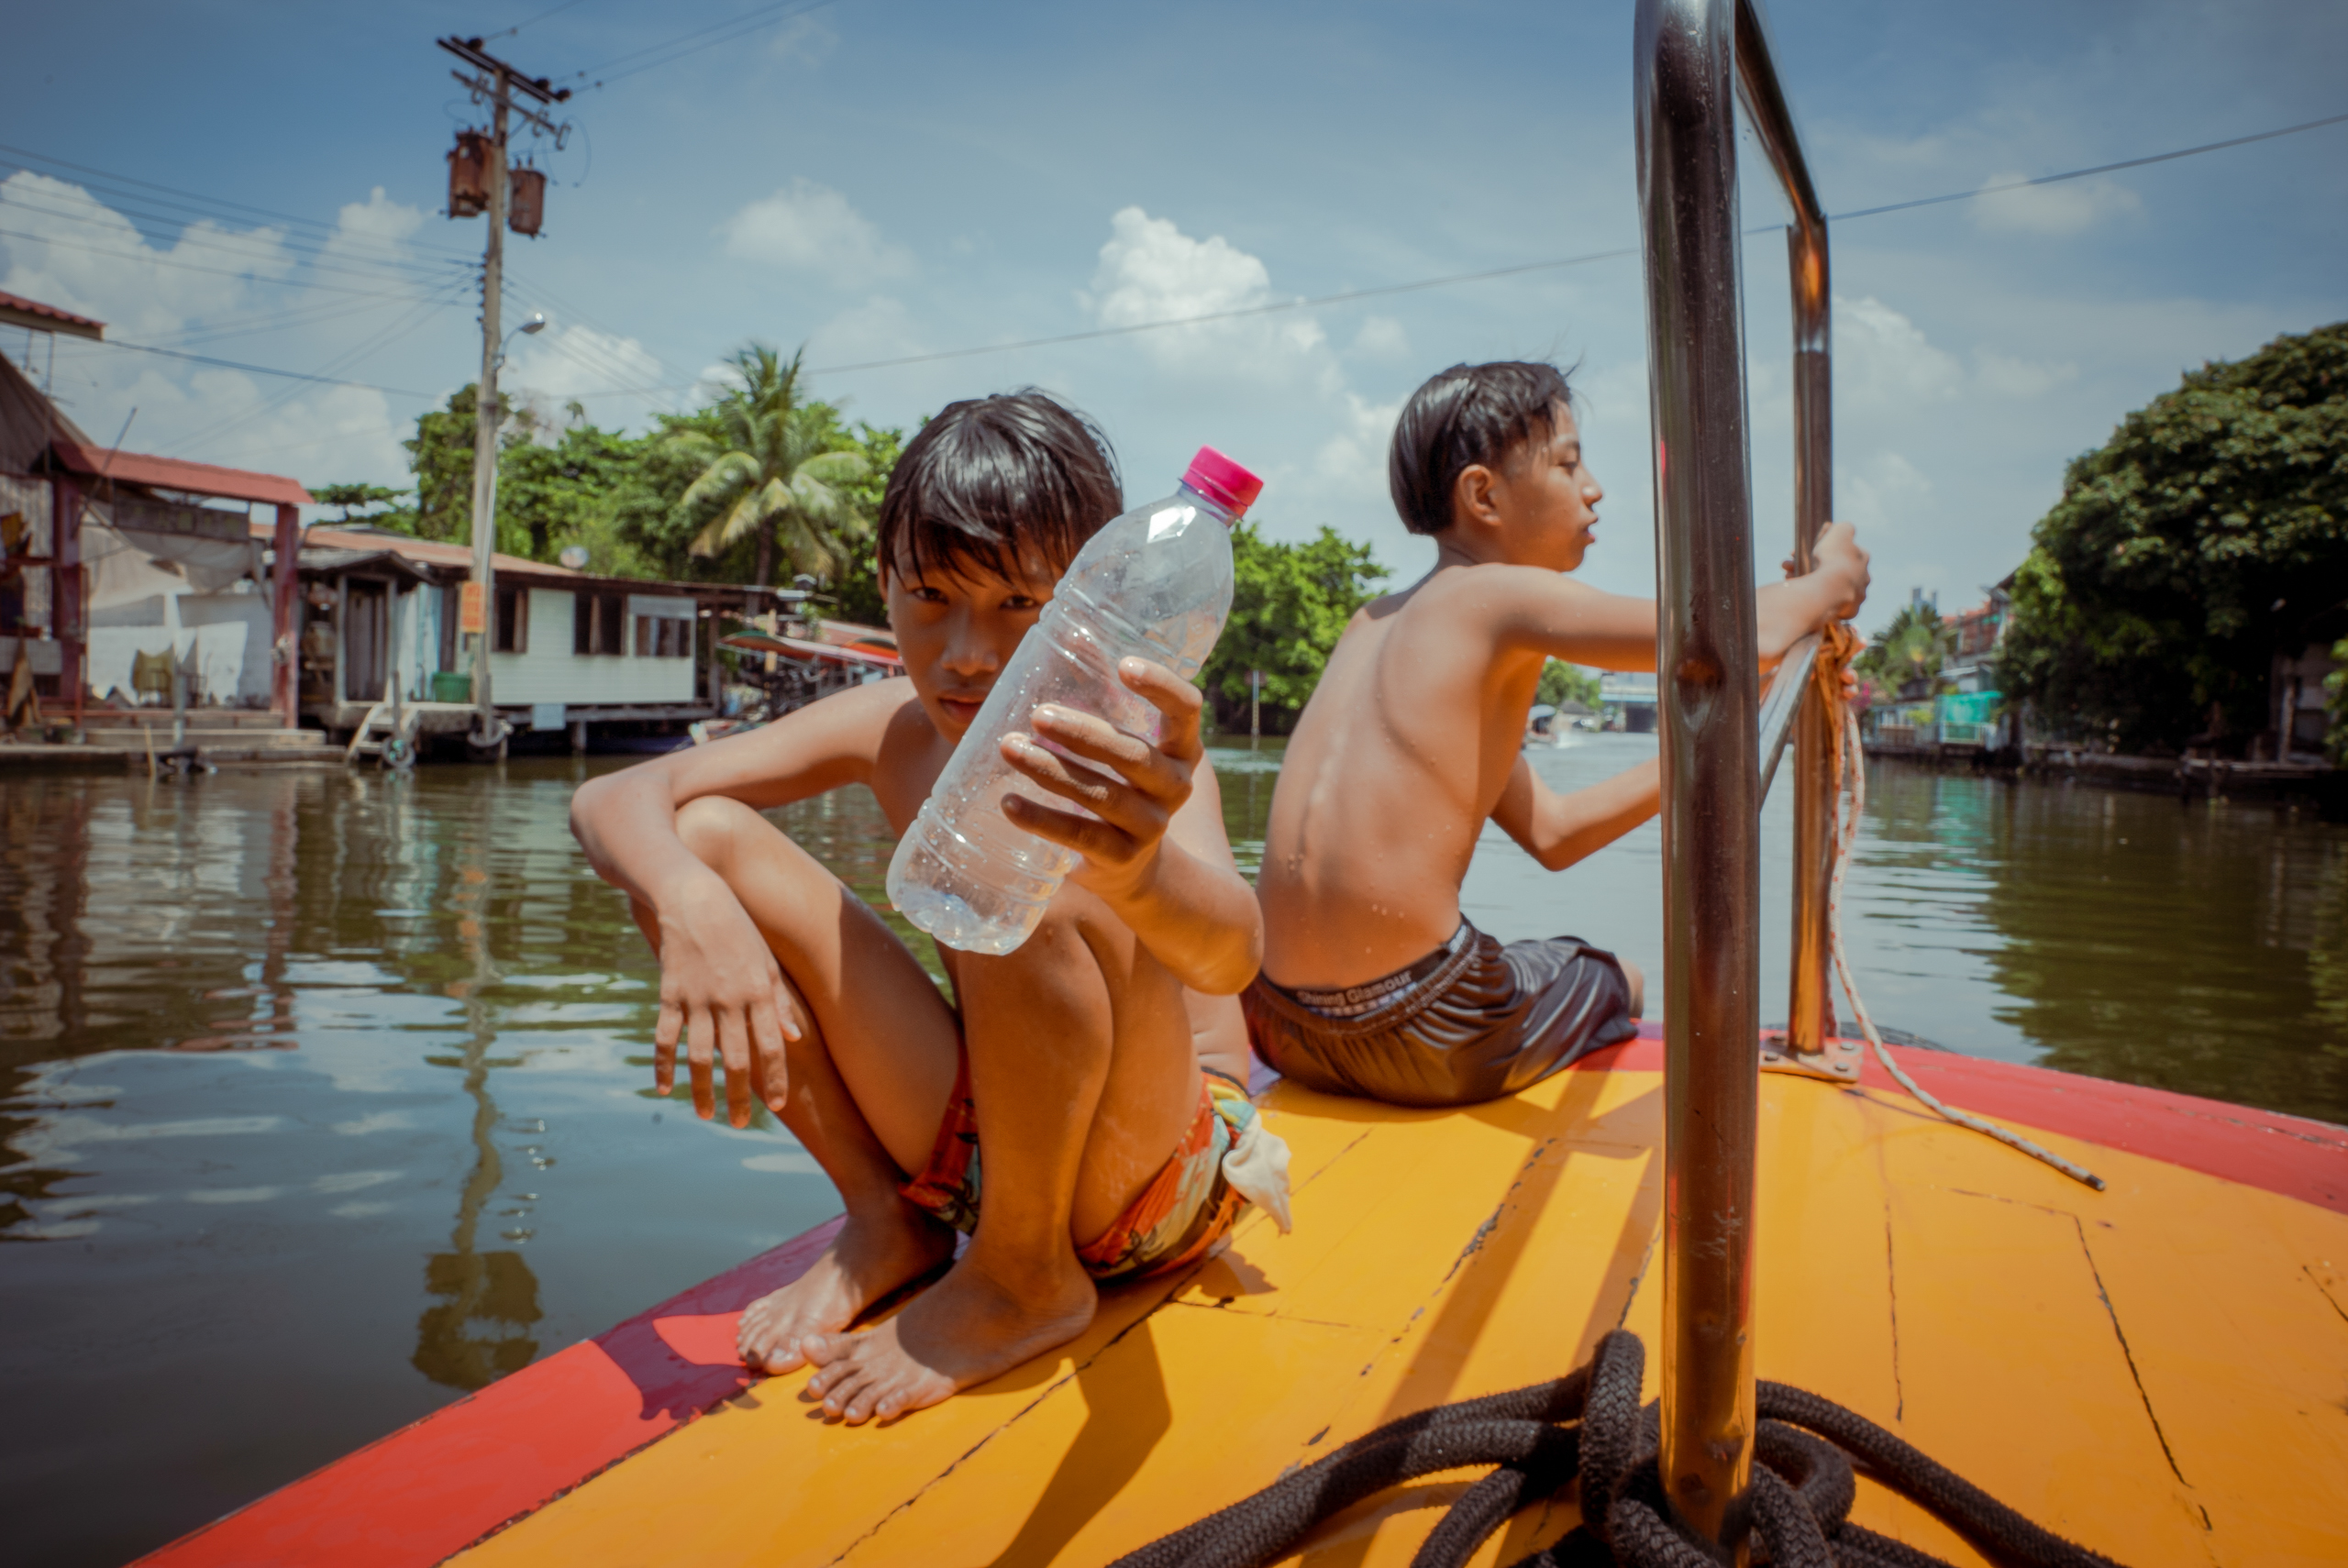 children on floating vessel, one holding empty plastic bottle